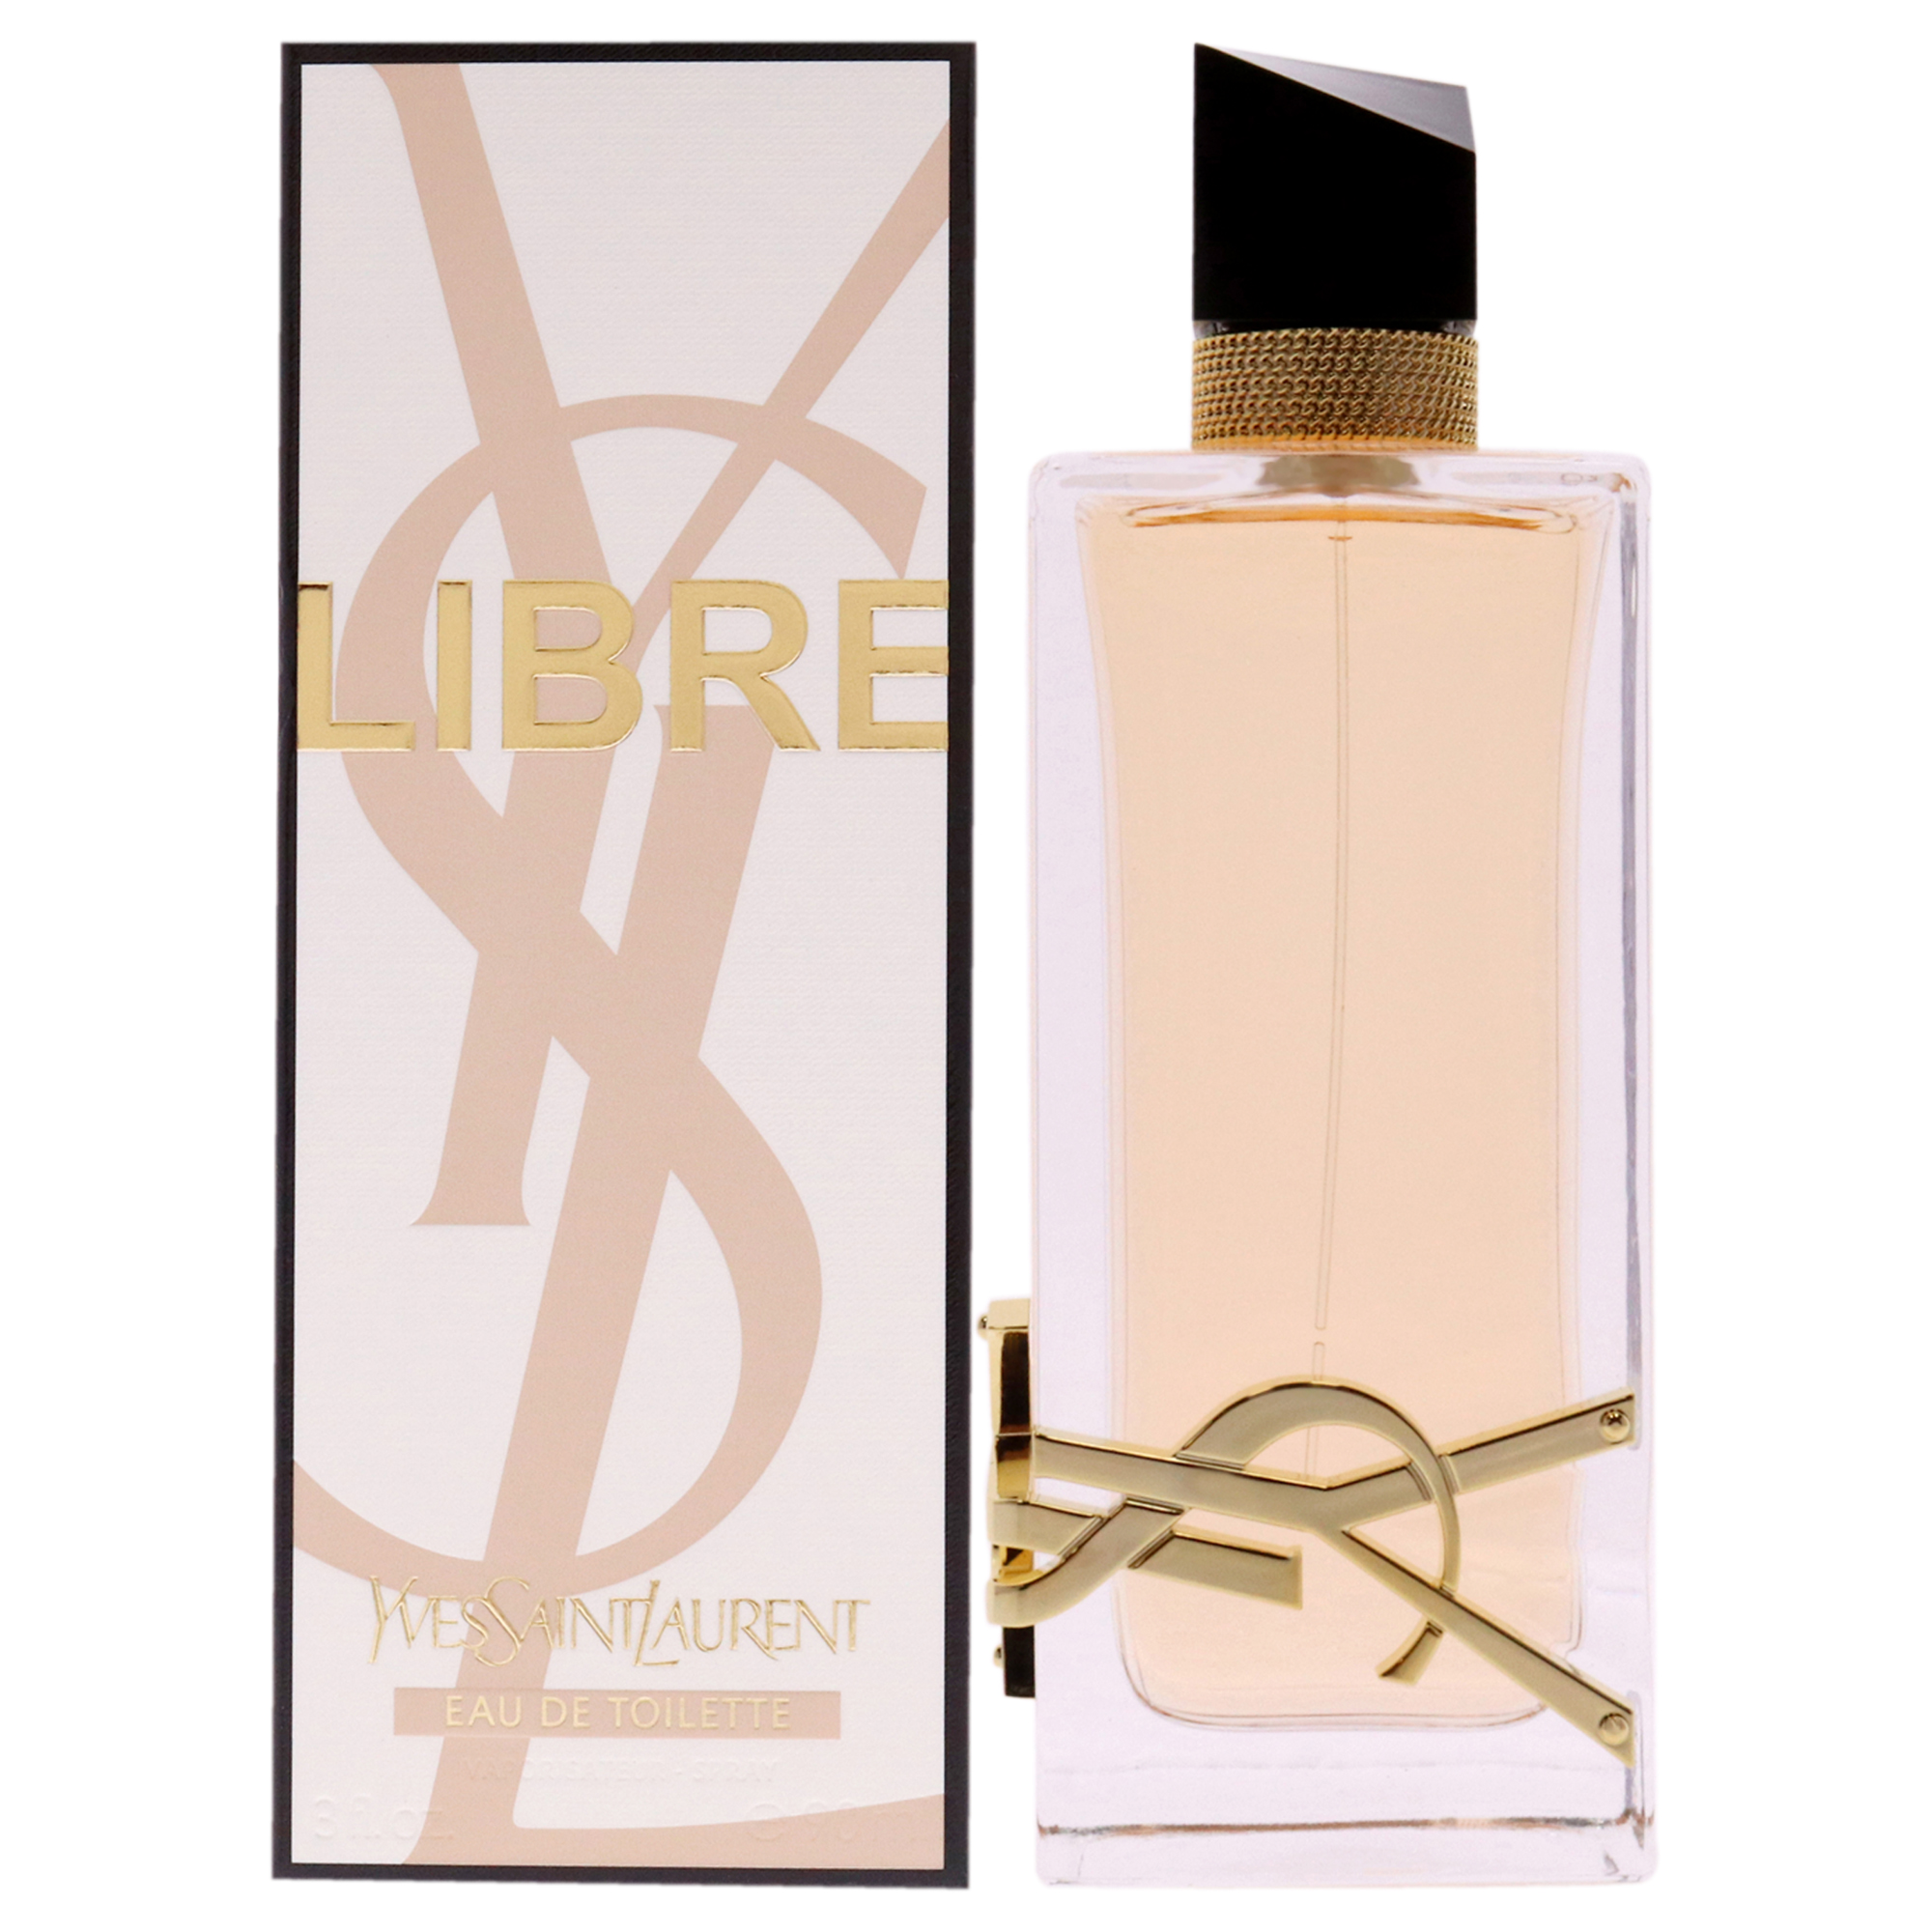 Libre: Yves Saint Laurent launches 'gender-bending' new fragrance